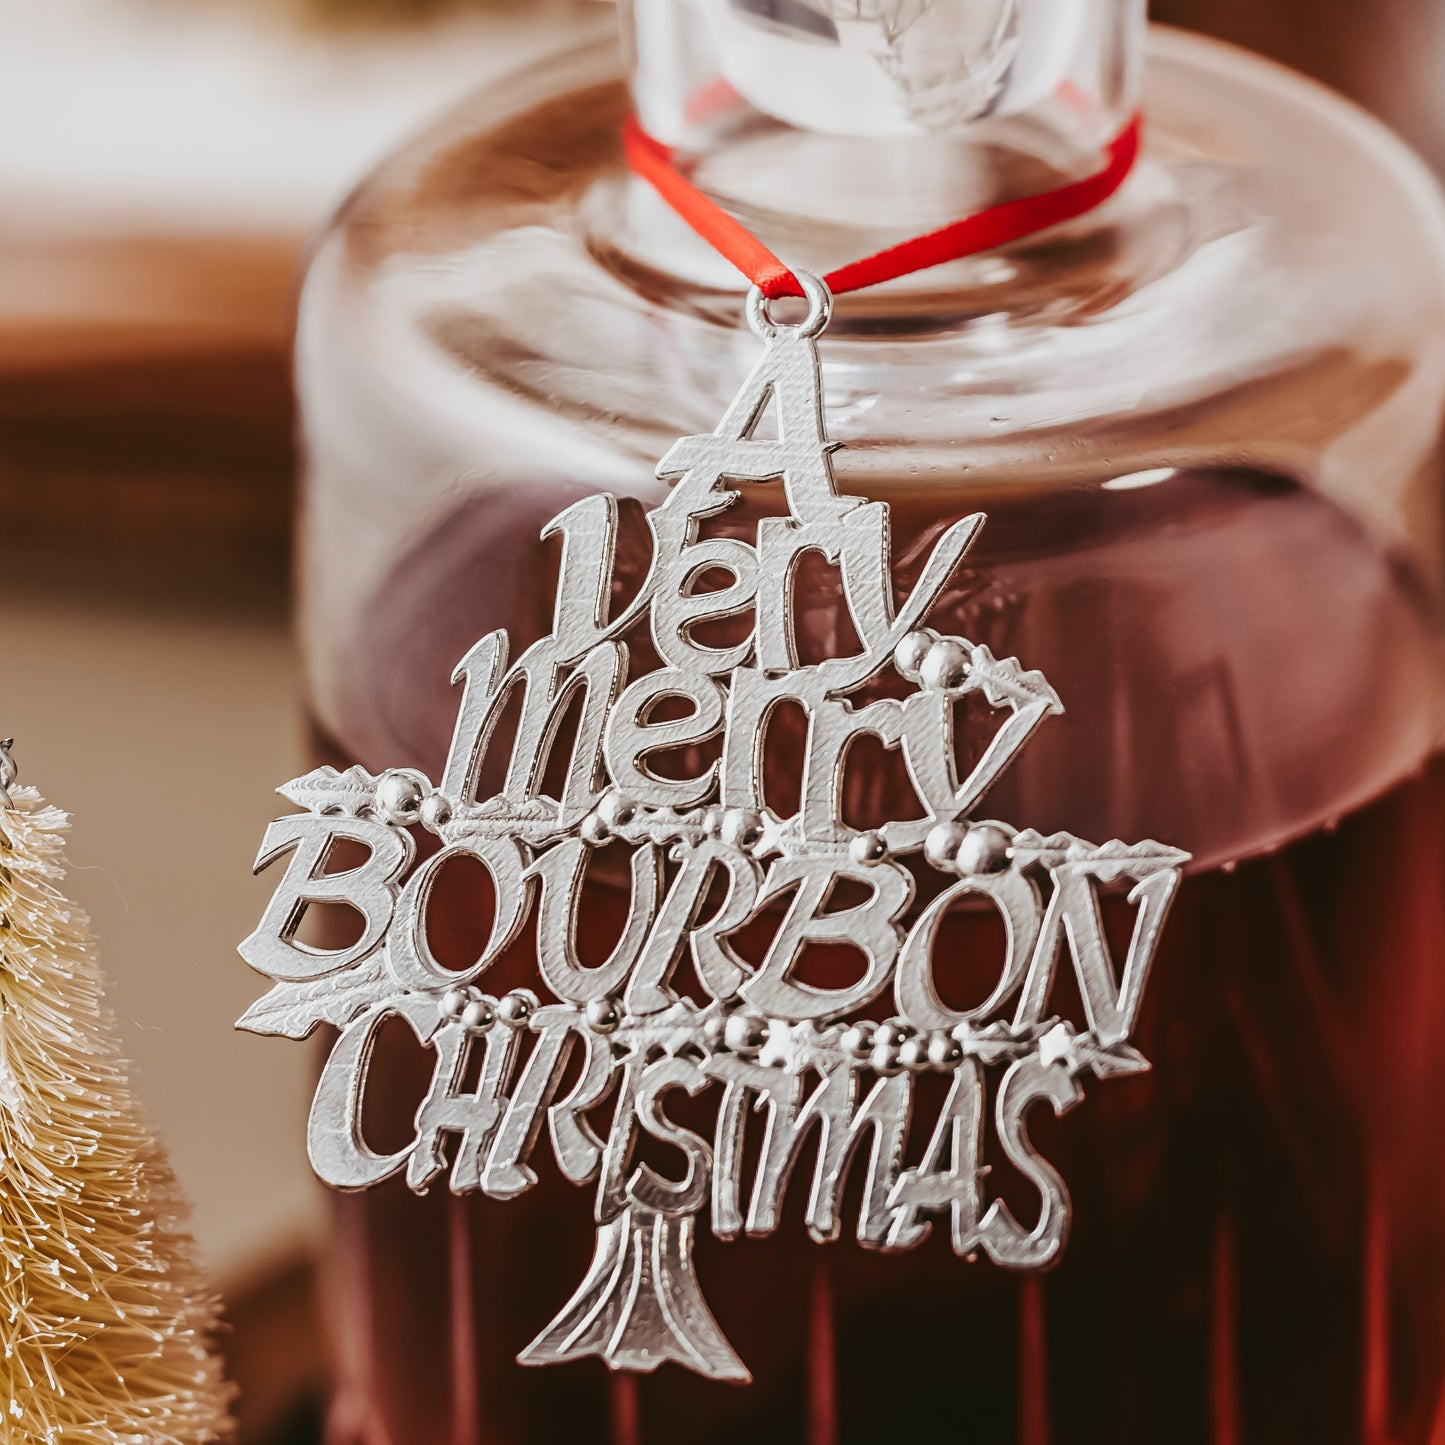 Bourbon Christmas Ornament - A Very Merry Bourbon Christmas - Bourbon Hunter Gift